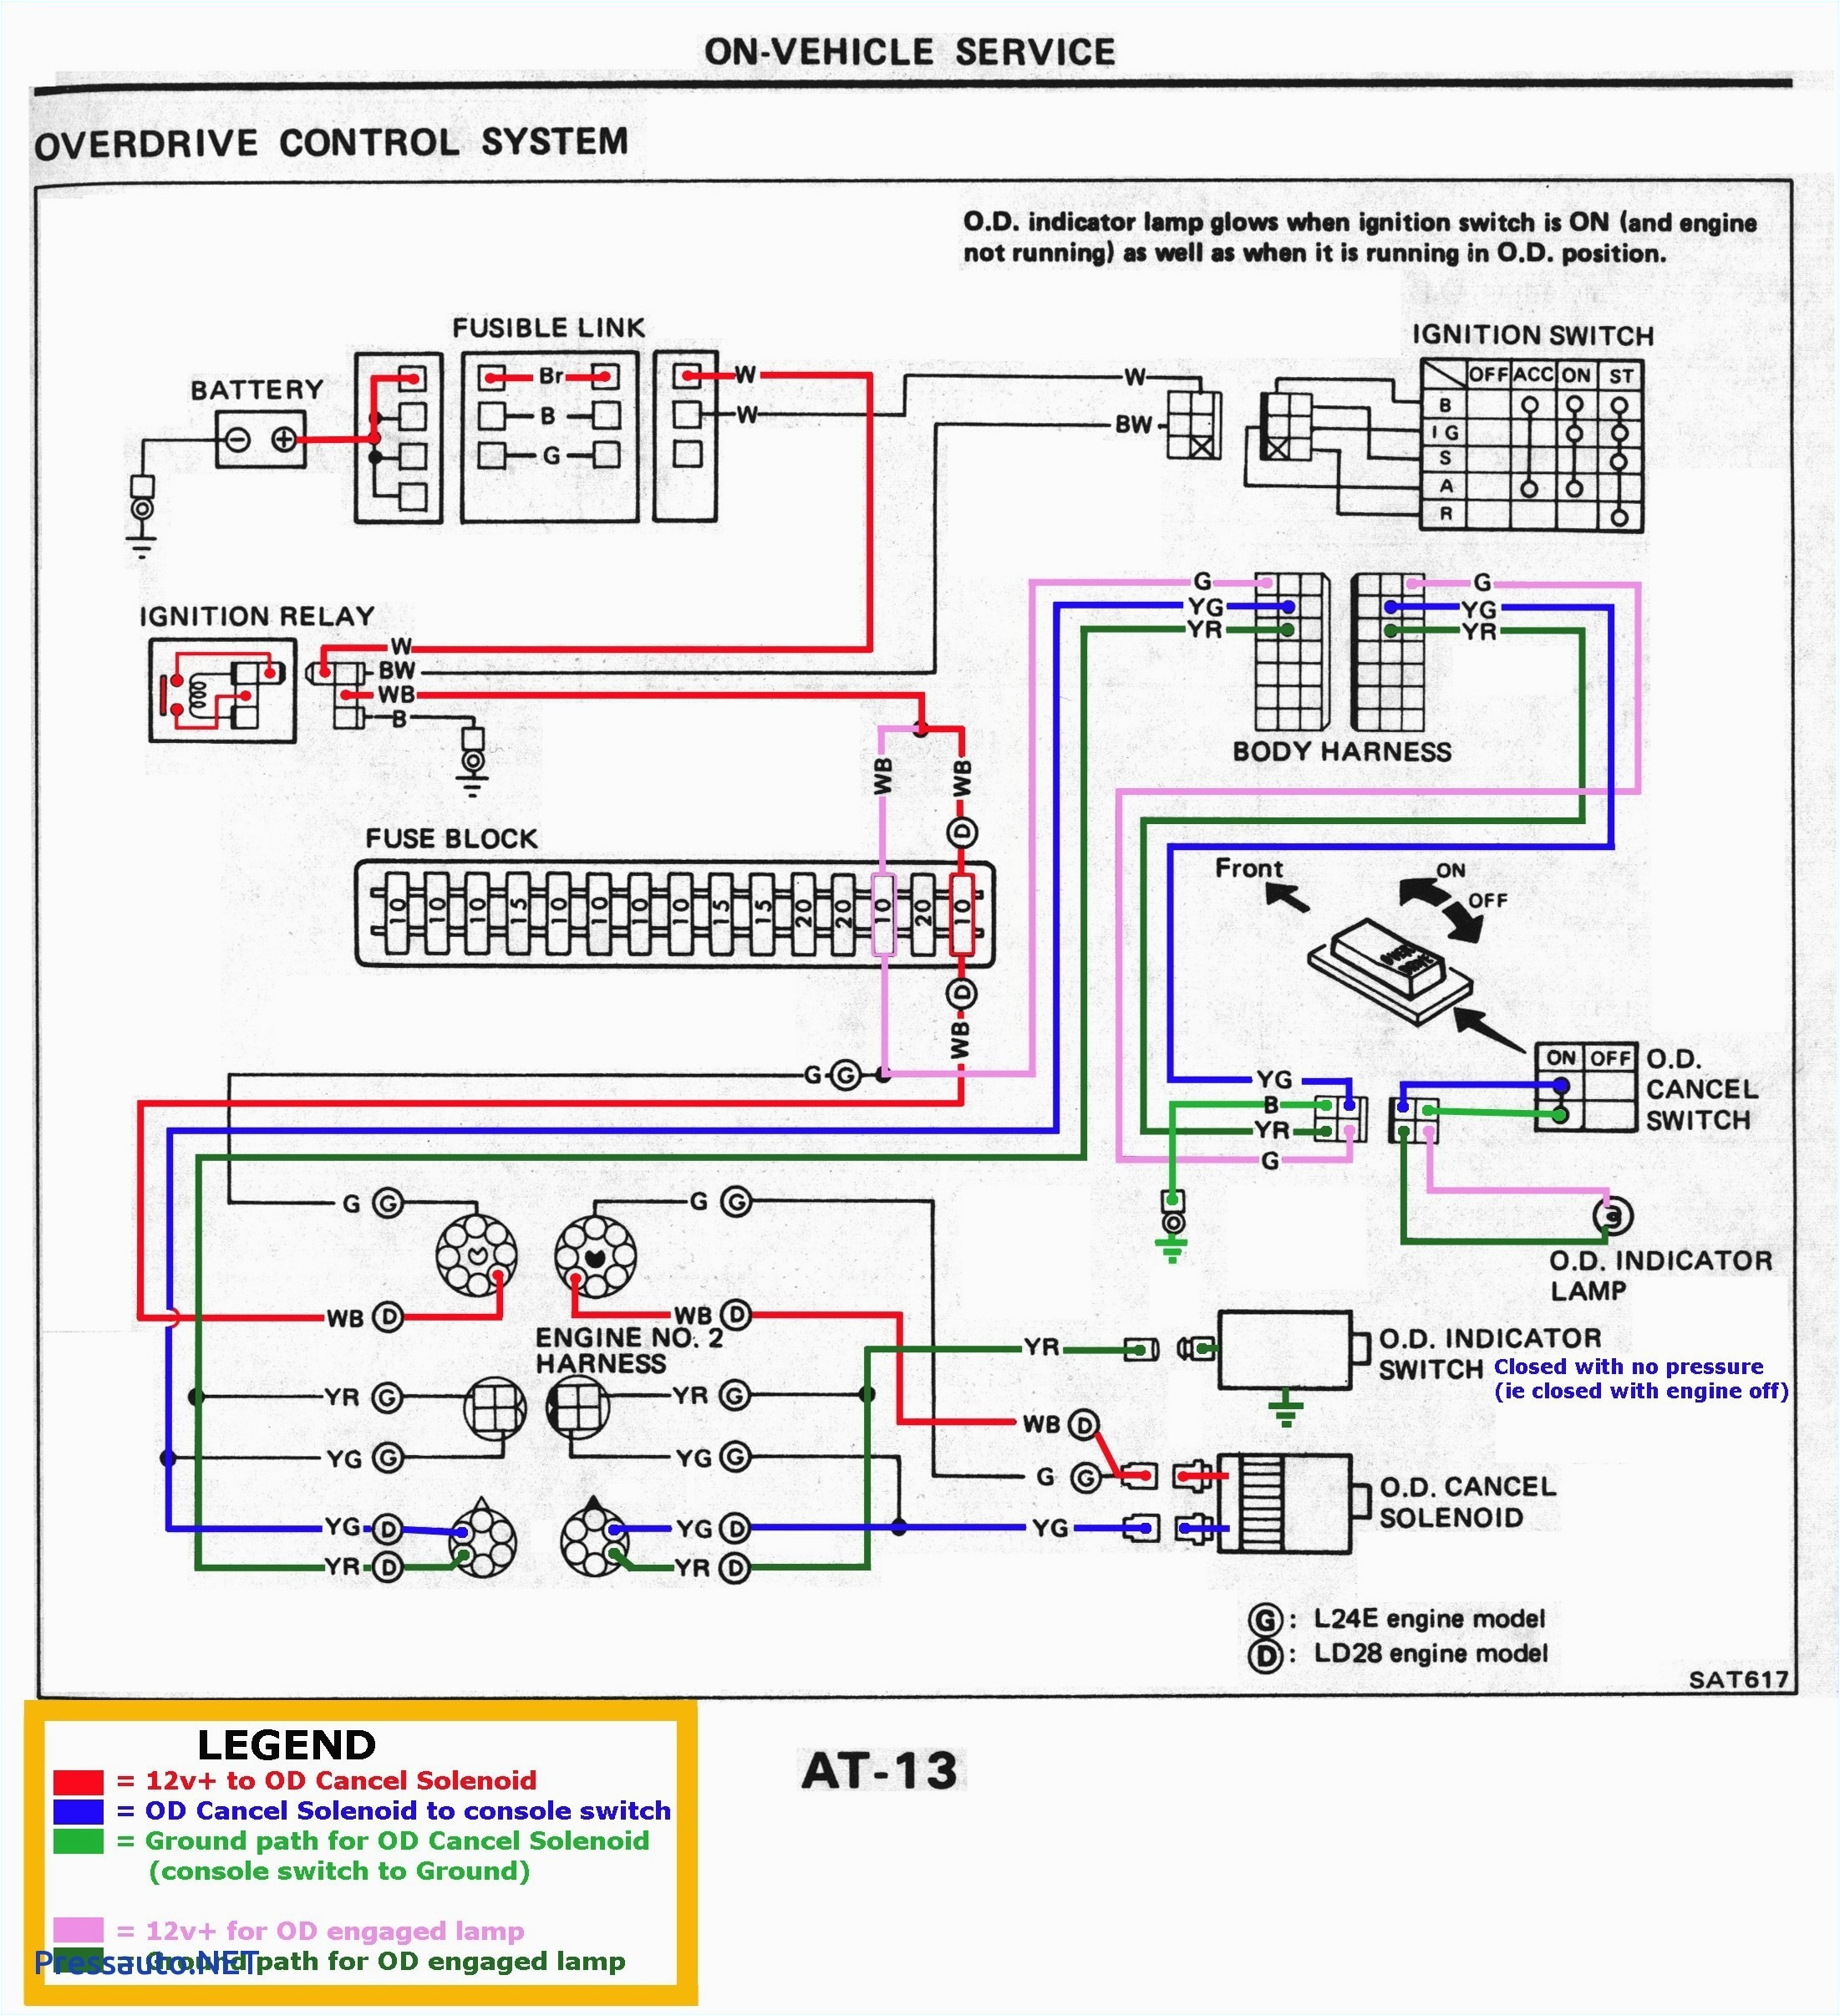 bazooka wire harness diagram wiring diagramomega subwoofer wire harness diagram wiring diagrambazooka wire diagram wiring diagram